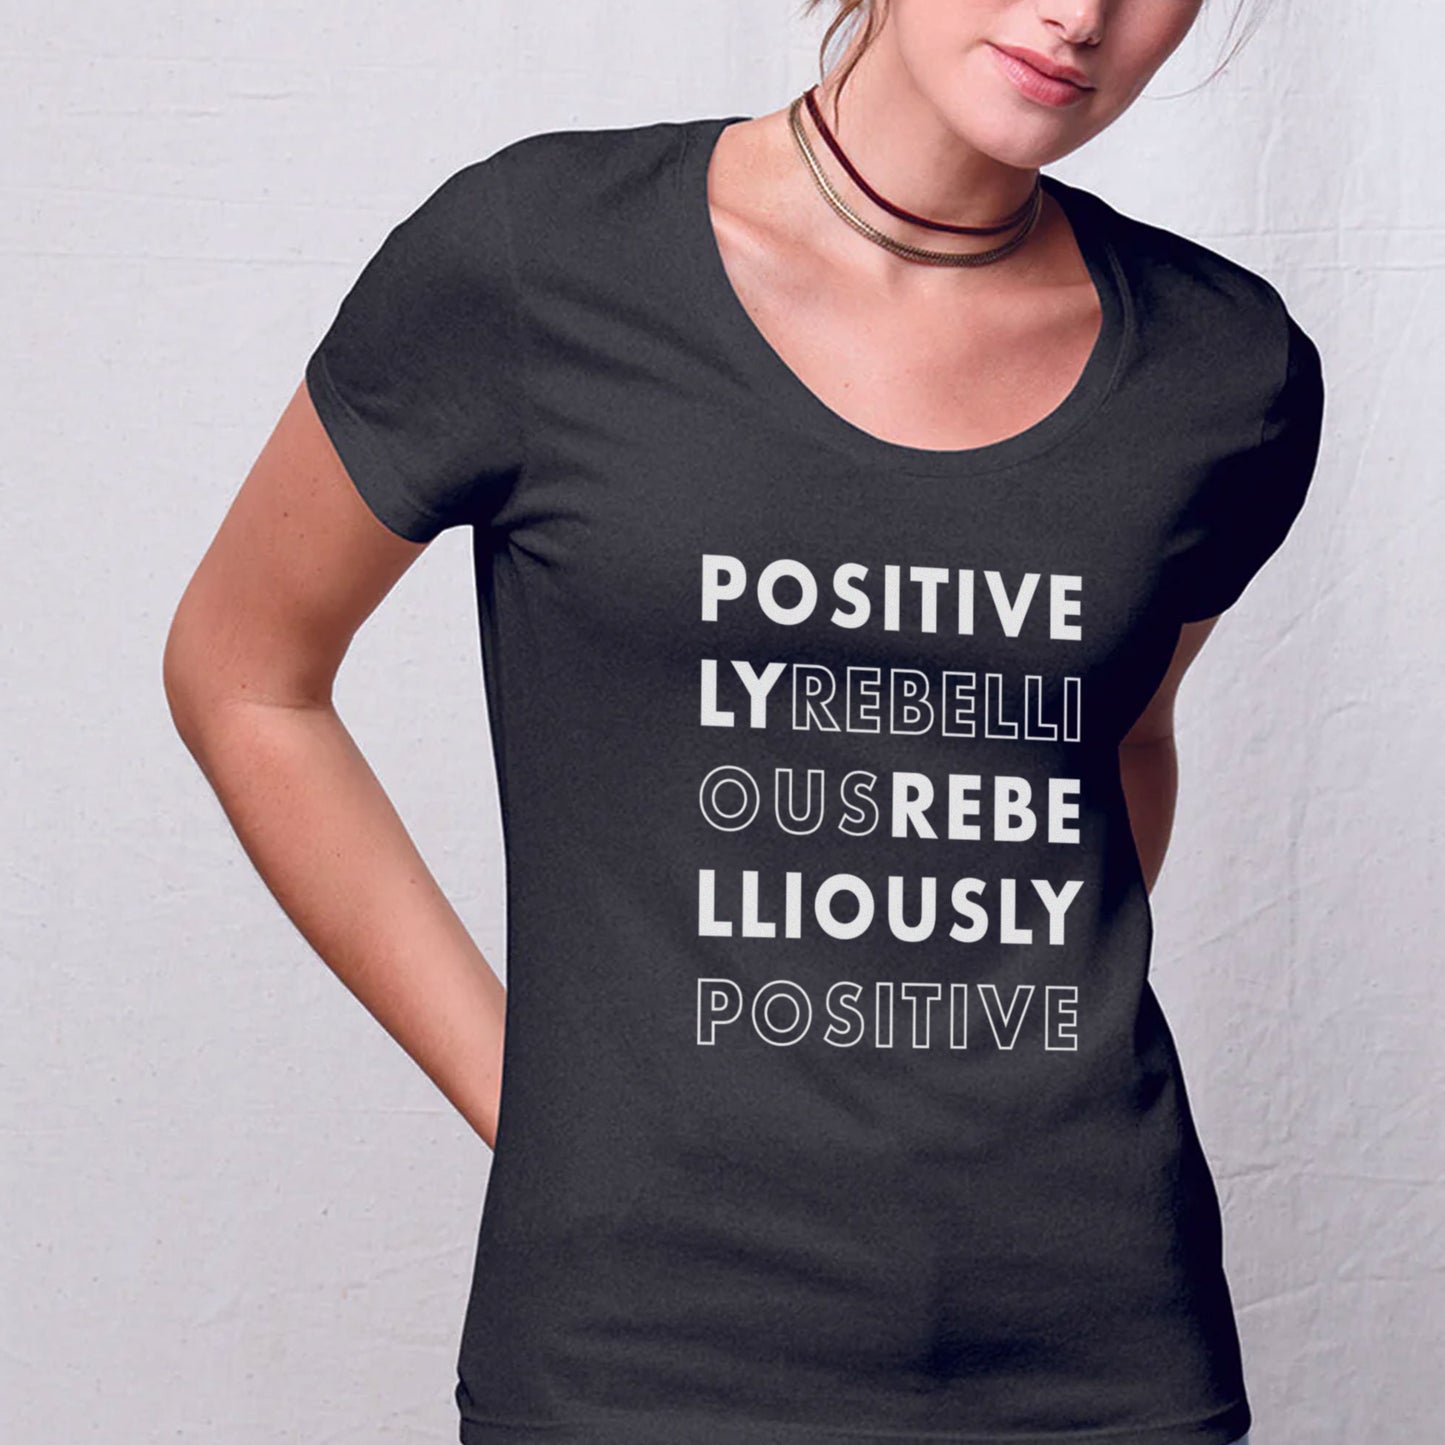 Positively Rebellious - Women’s Flex Scoop Neck Tee